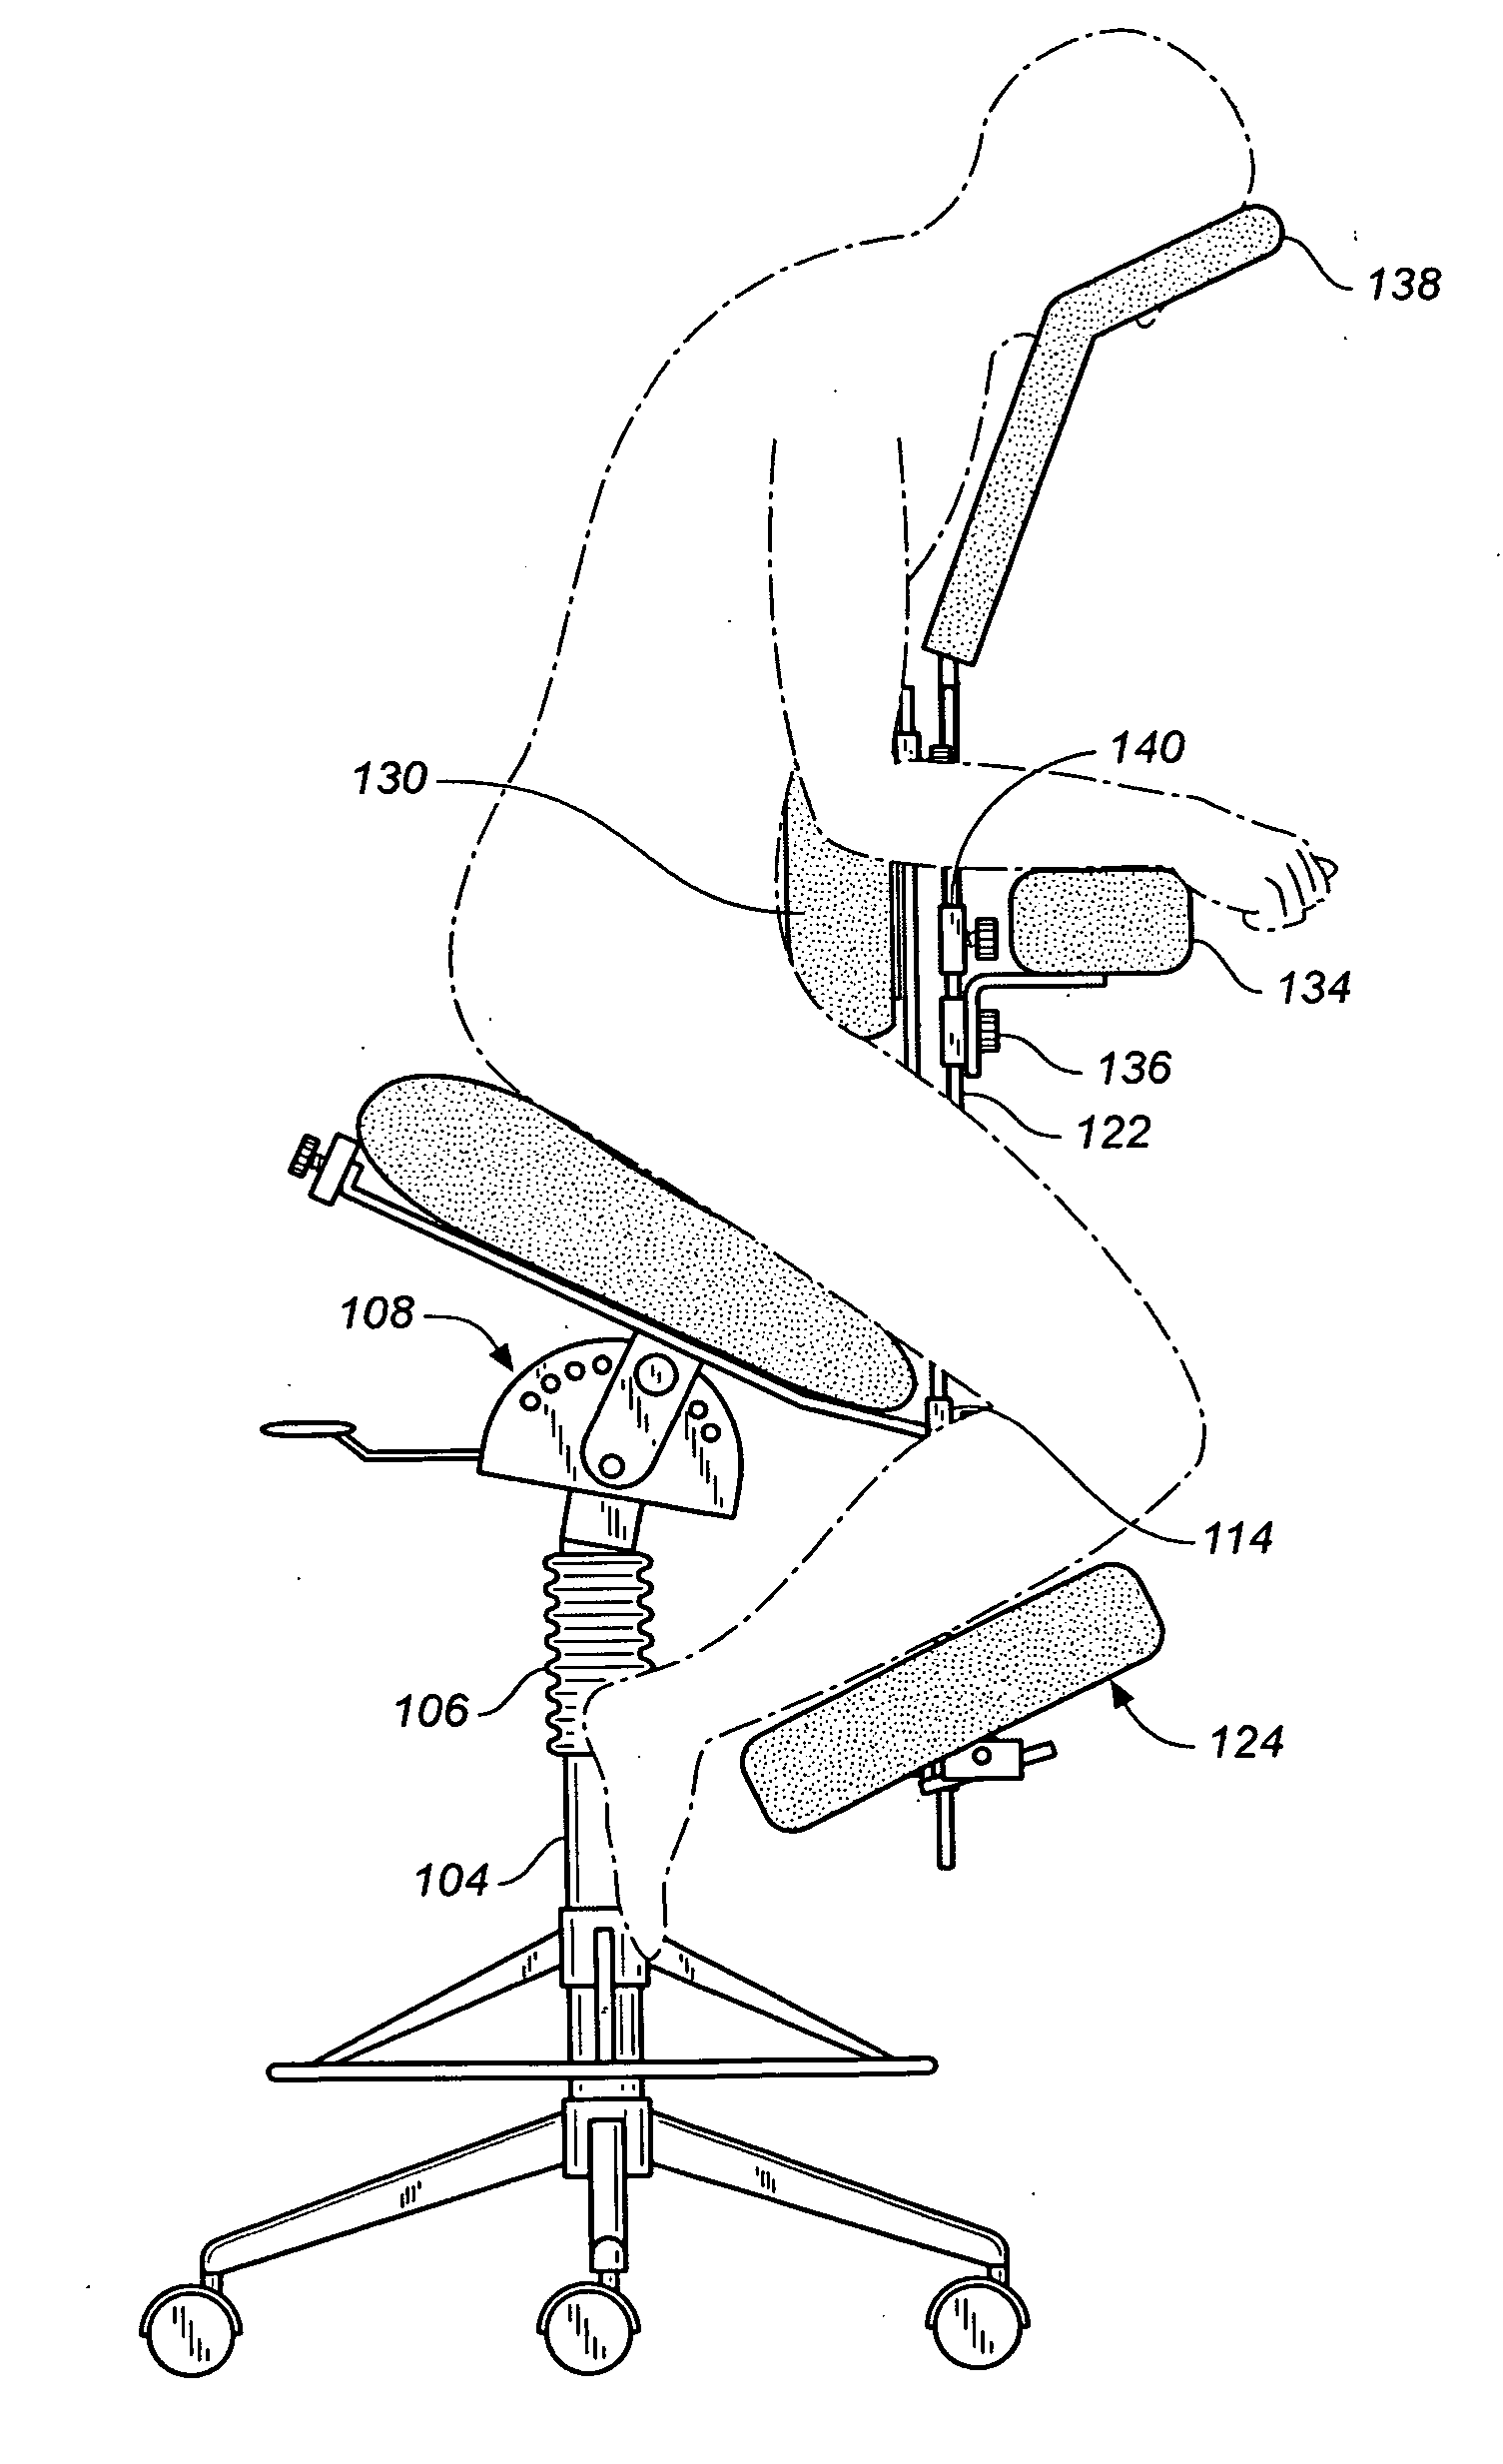 Modular ergonomic chair